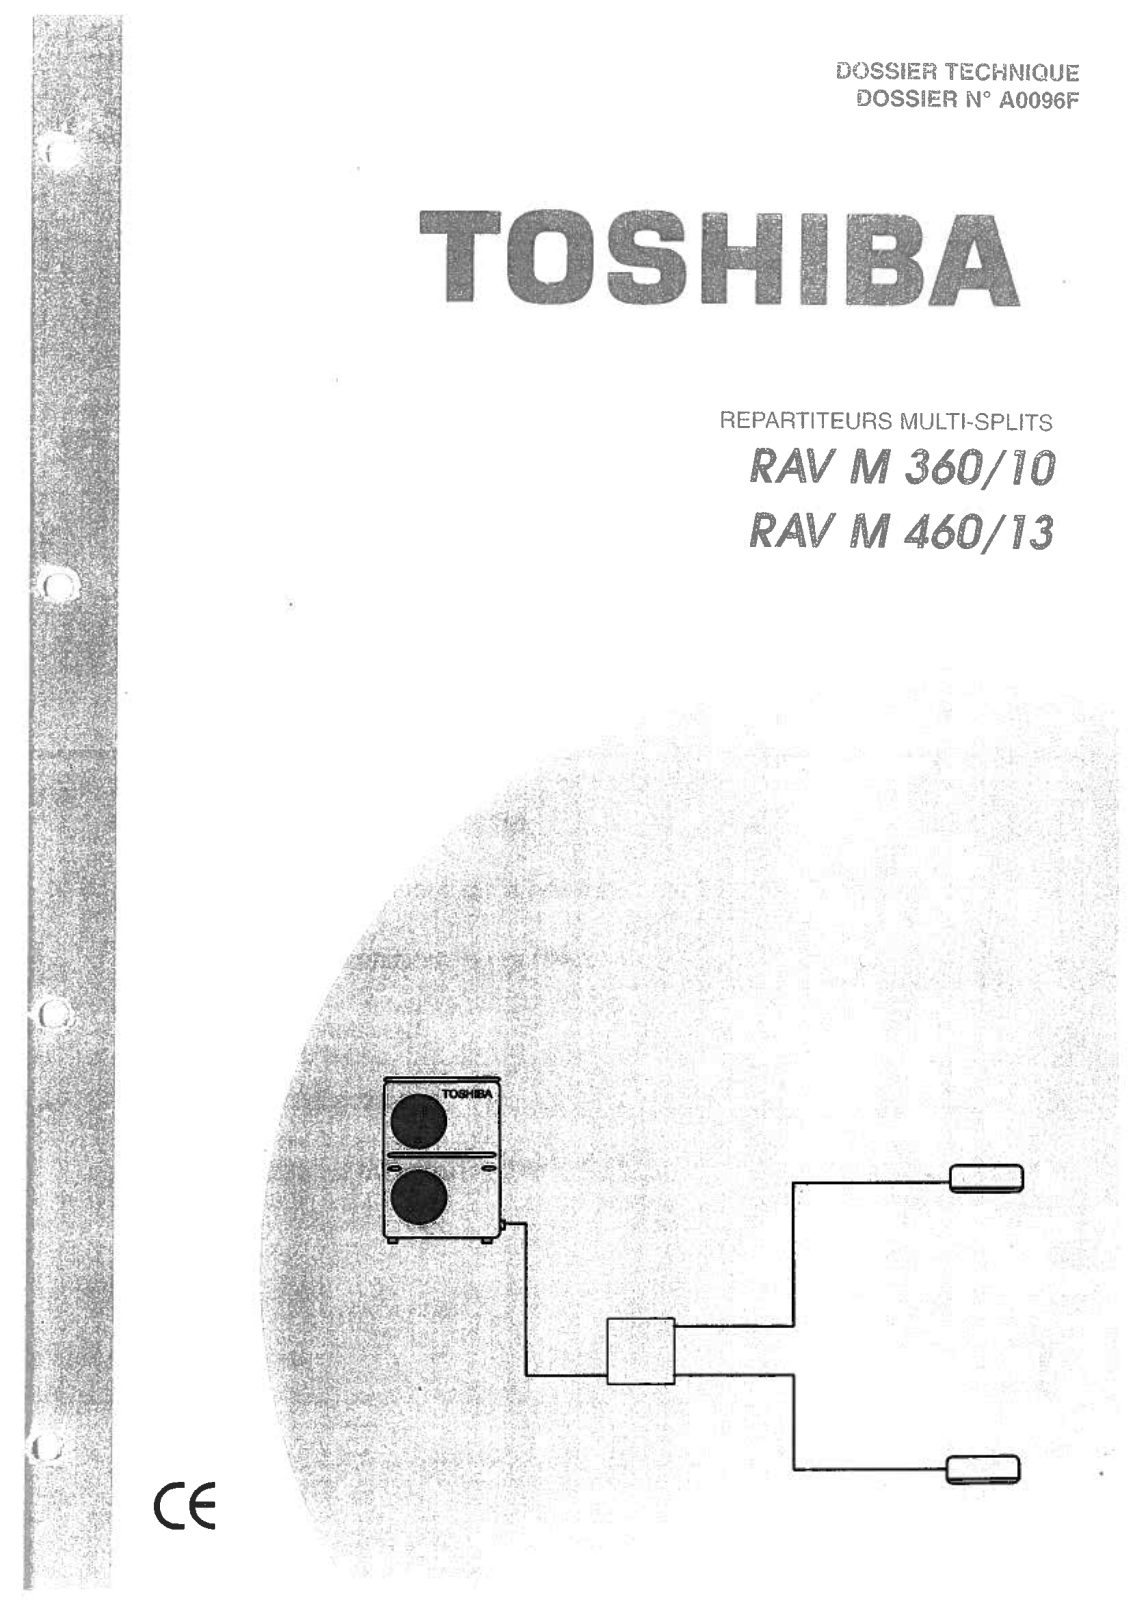 Toshiba RAV-M-360, RAV-M-460 SERVICE MANUAL